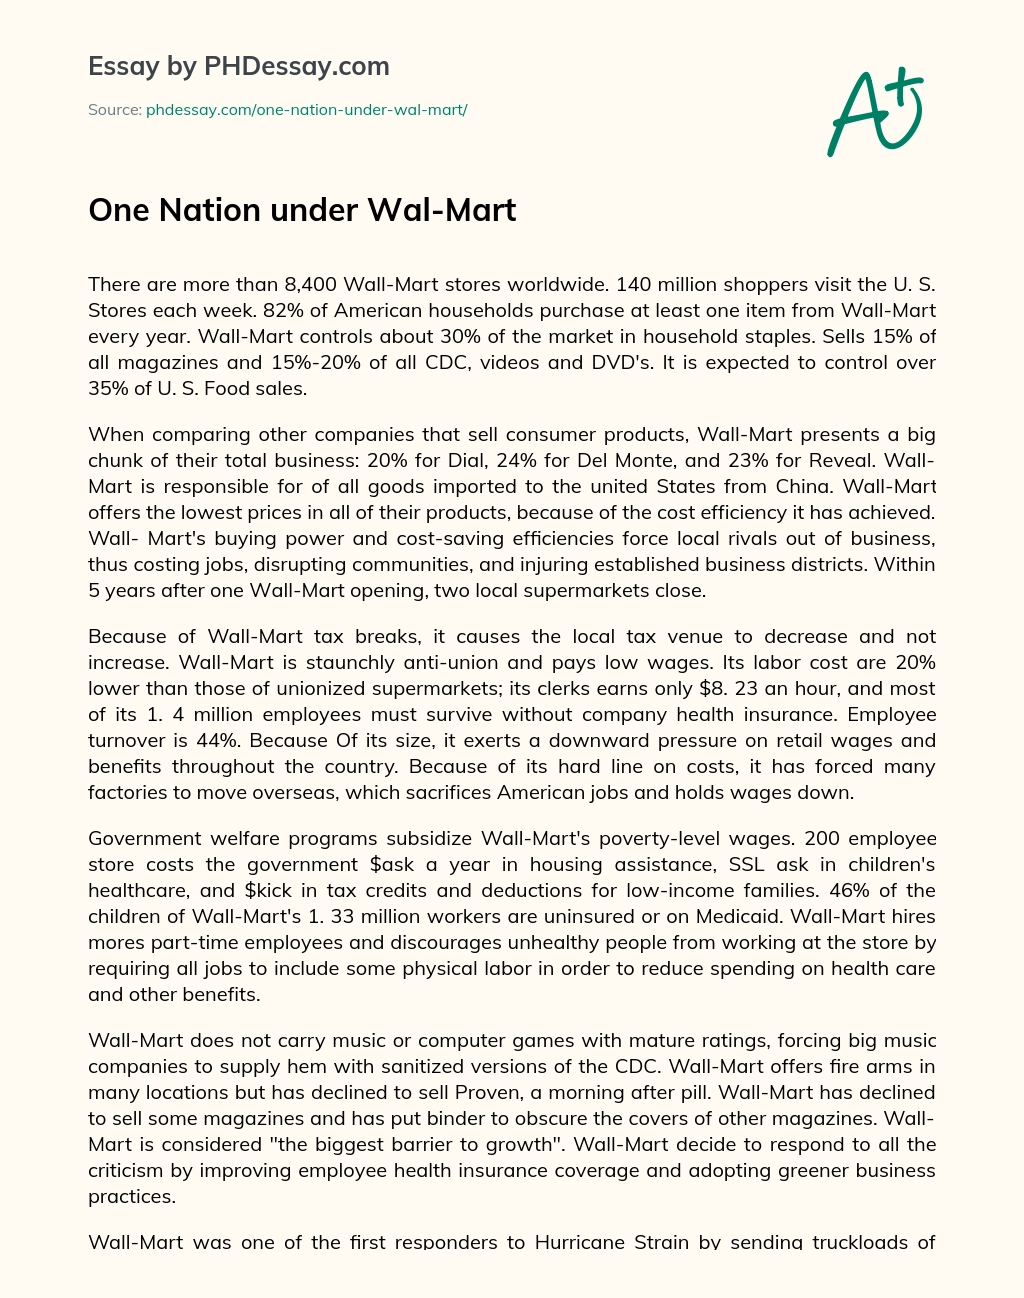 One Nation under Wal-Mart essay